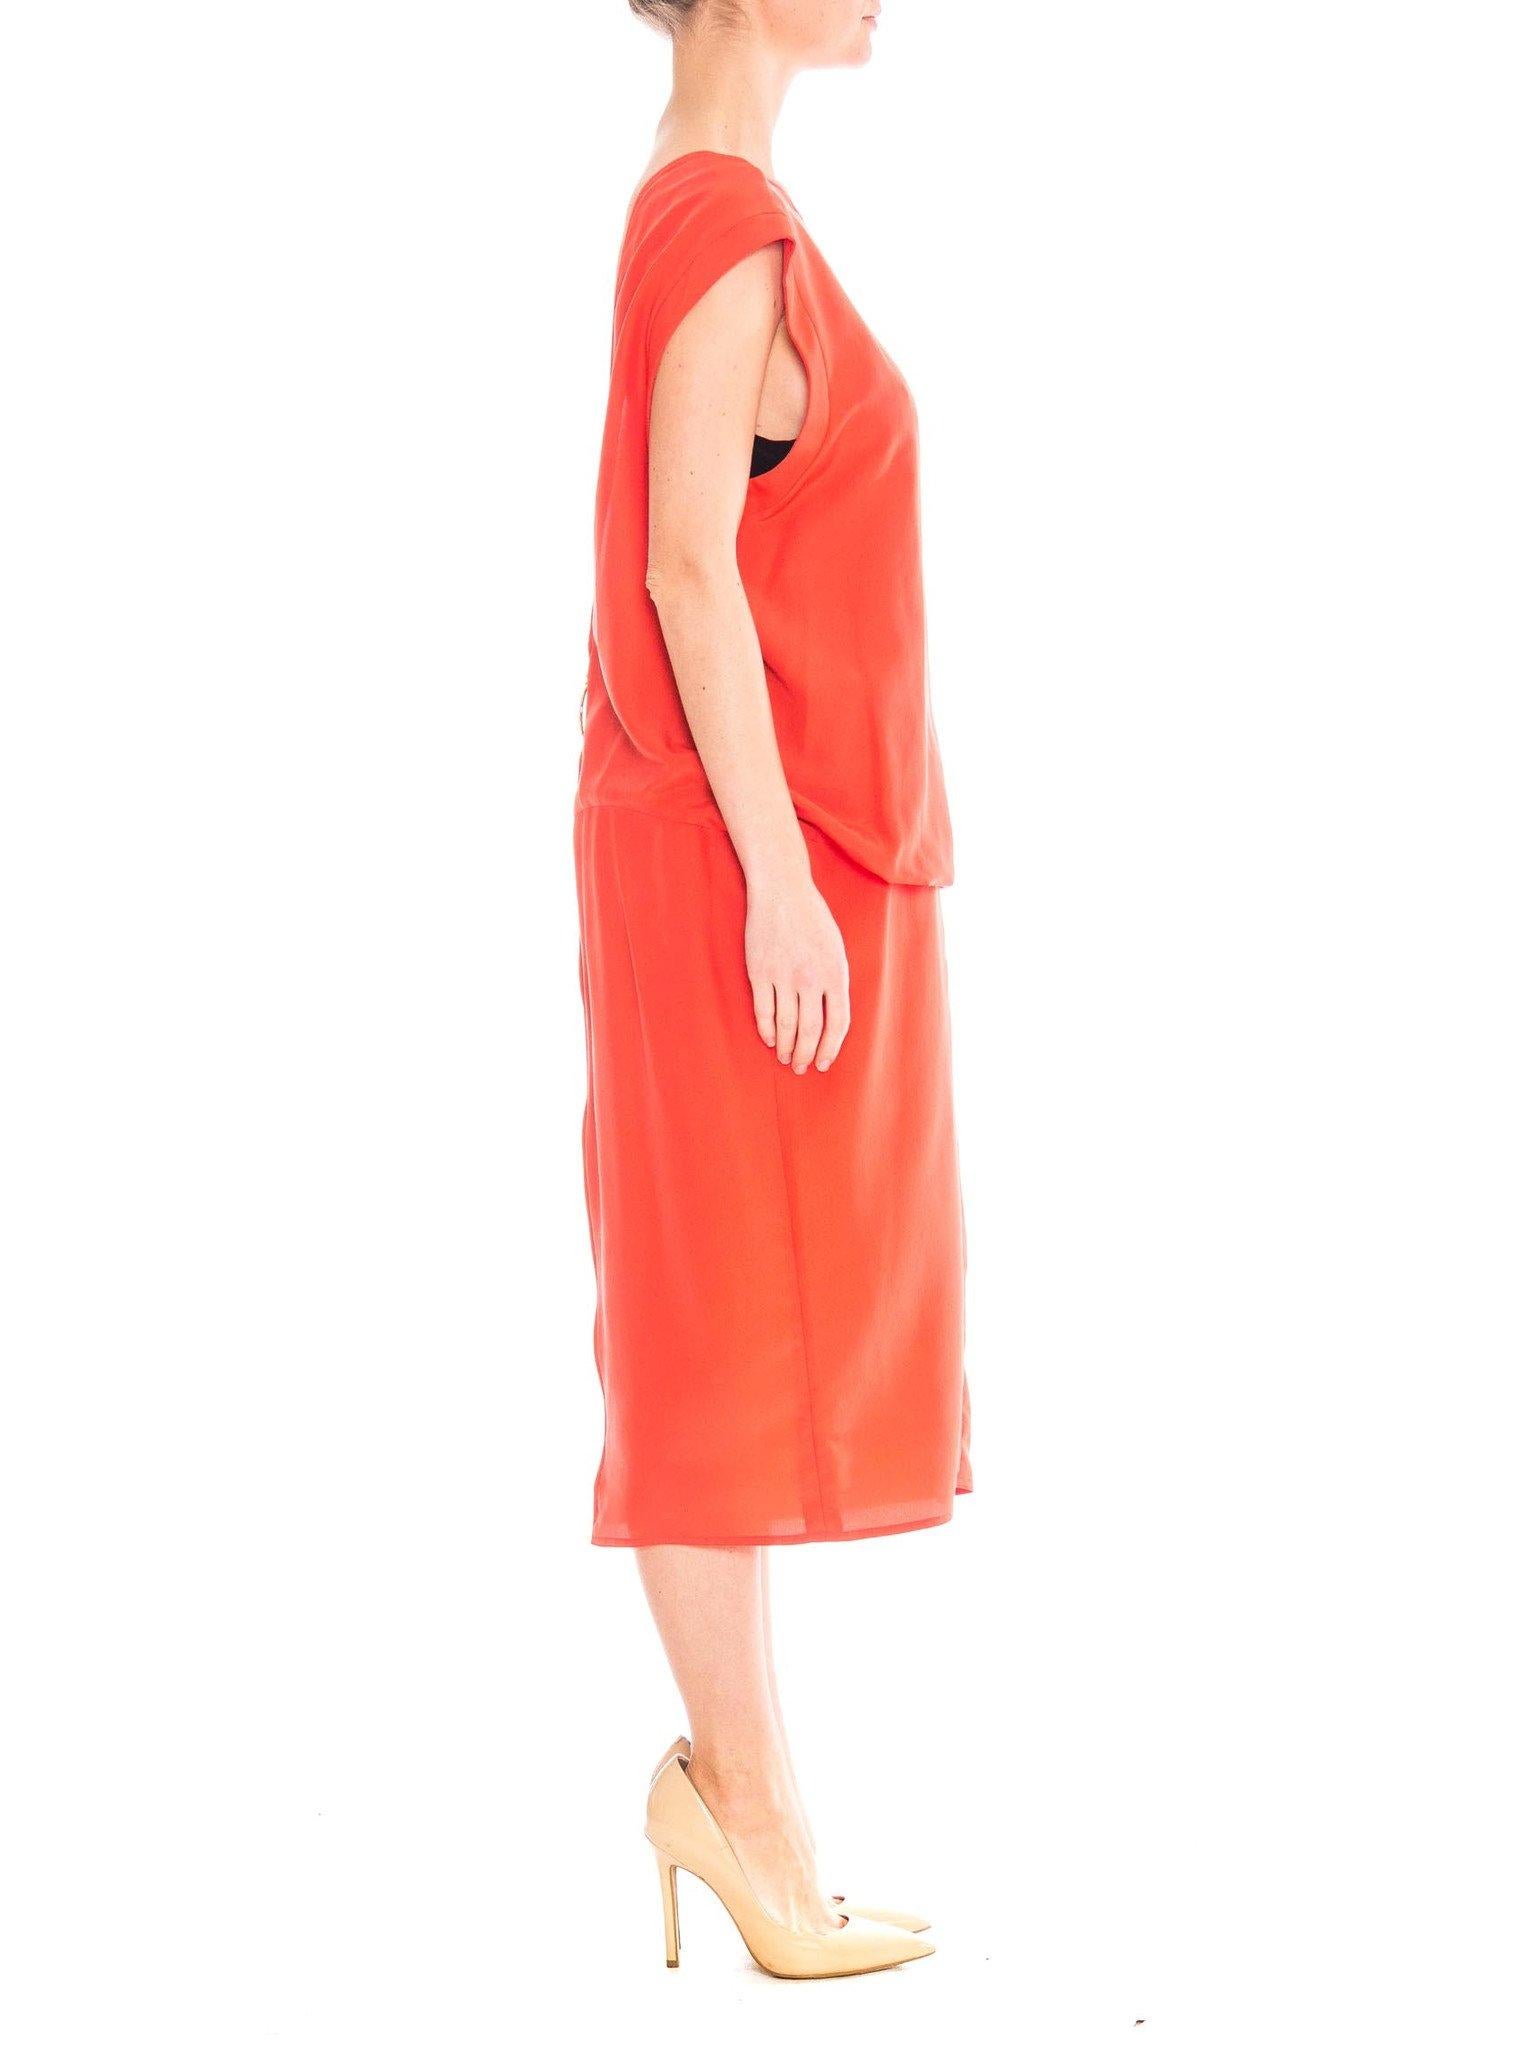 Women's 1980 GIANFRANCO FERRE Coral Light Weight Silk Low Back Minimalist Dress For Sale